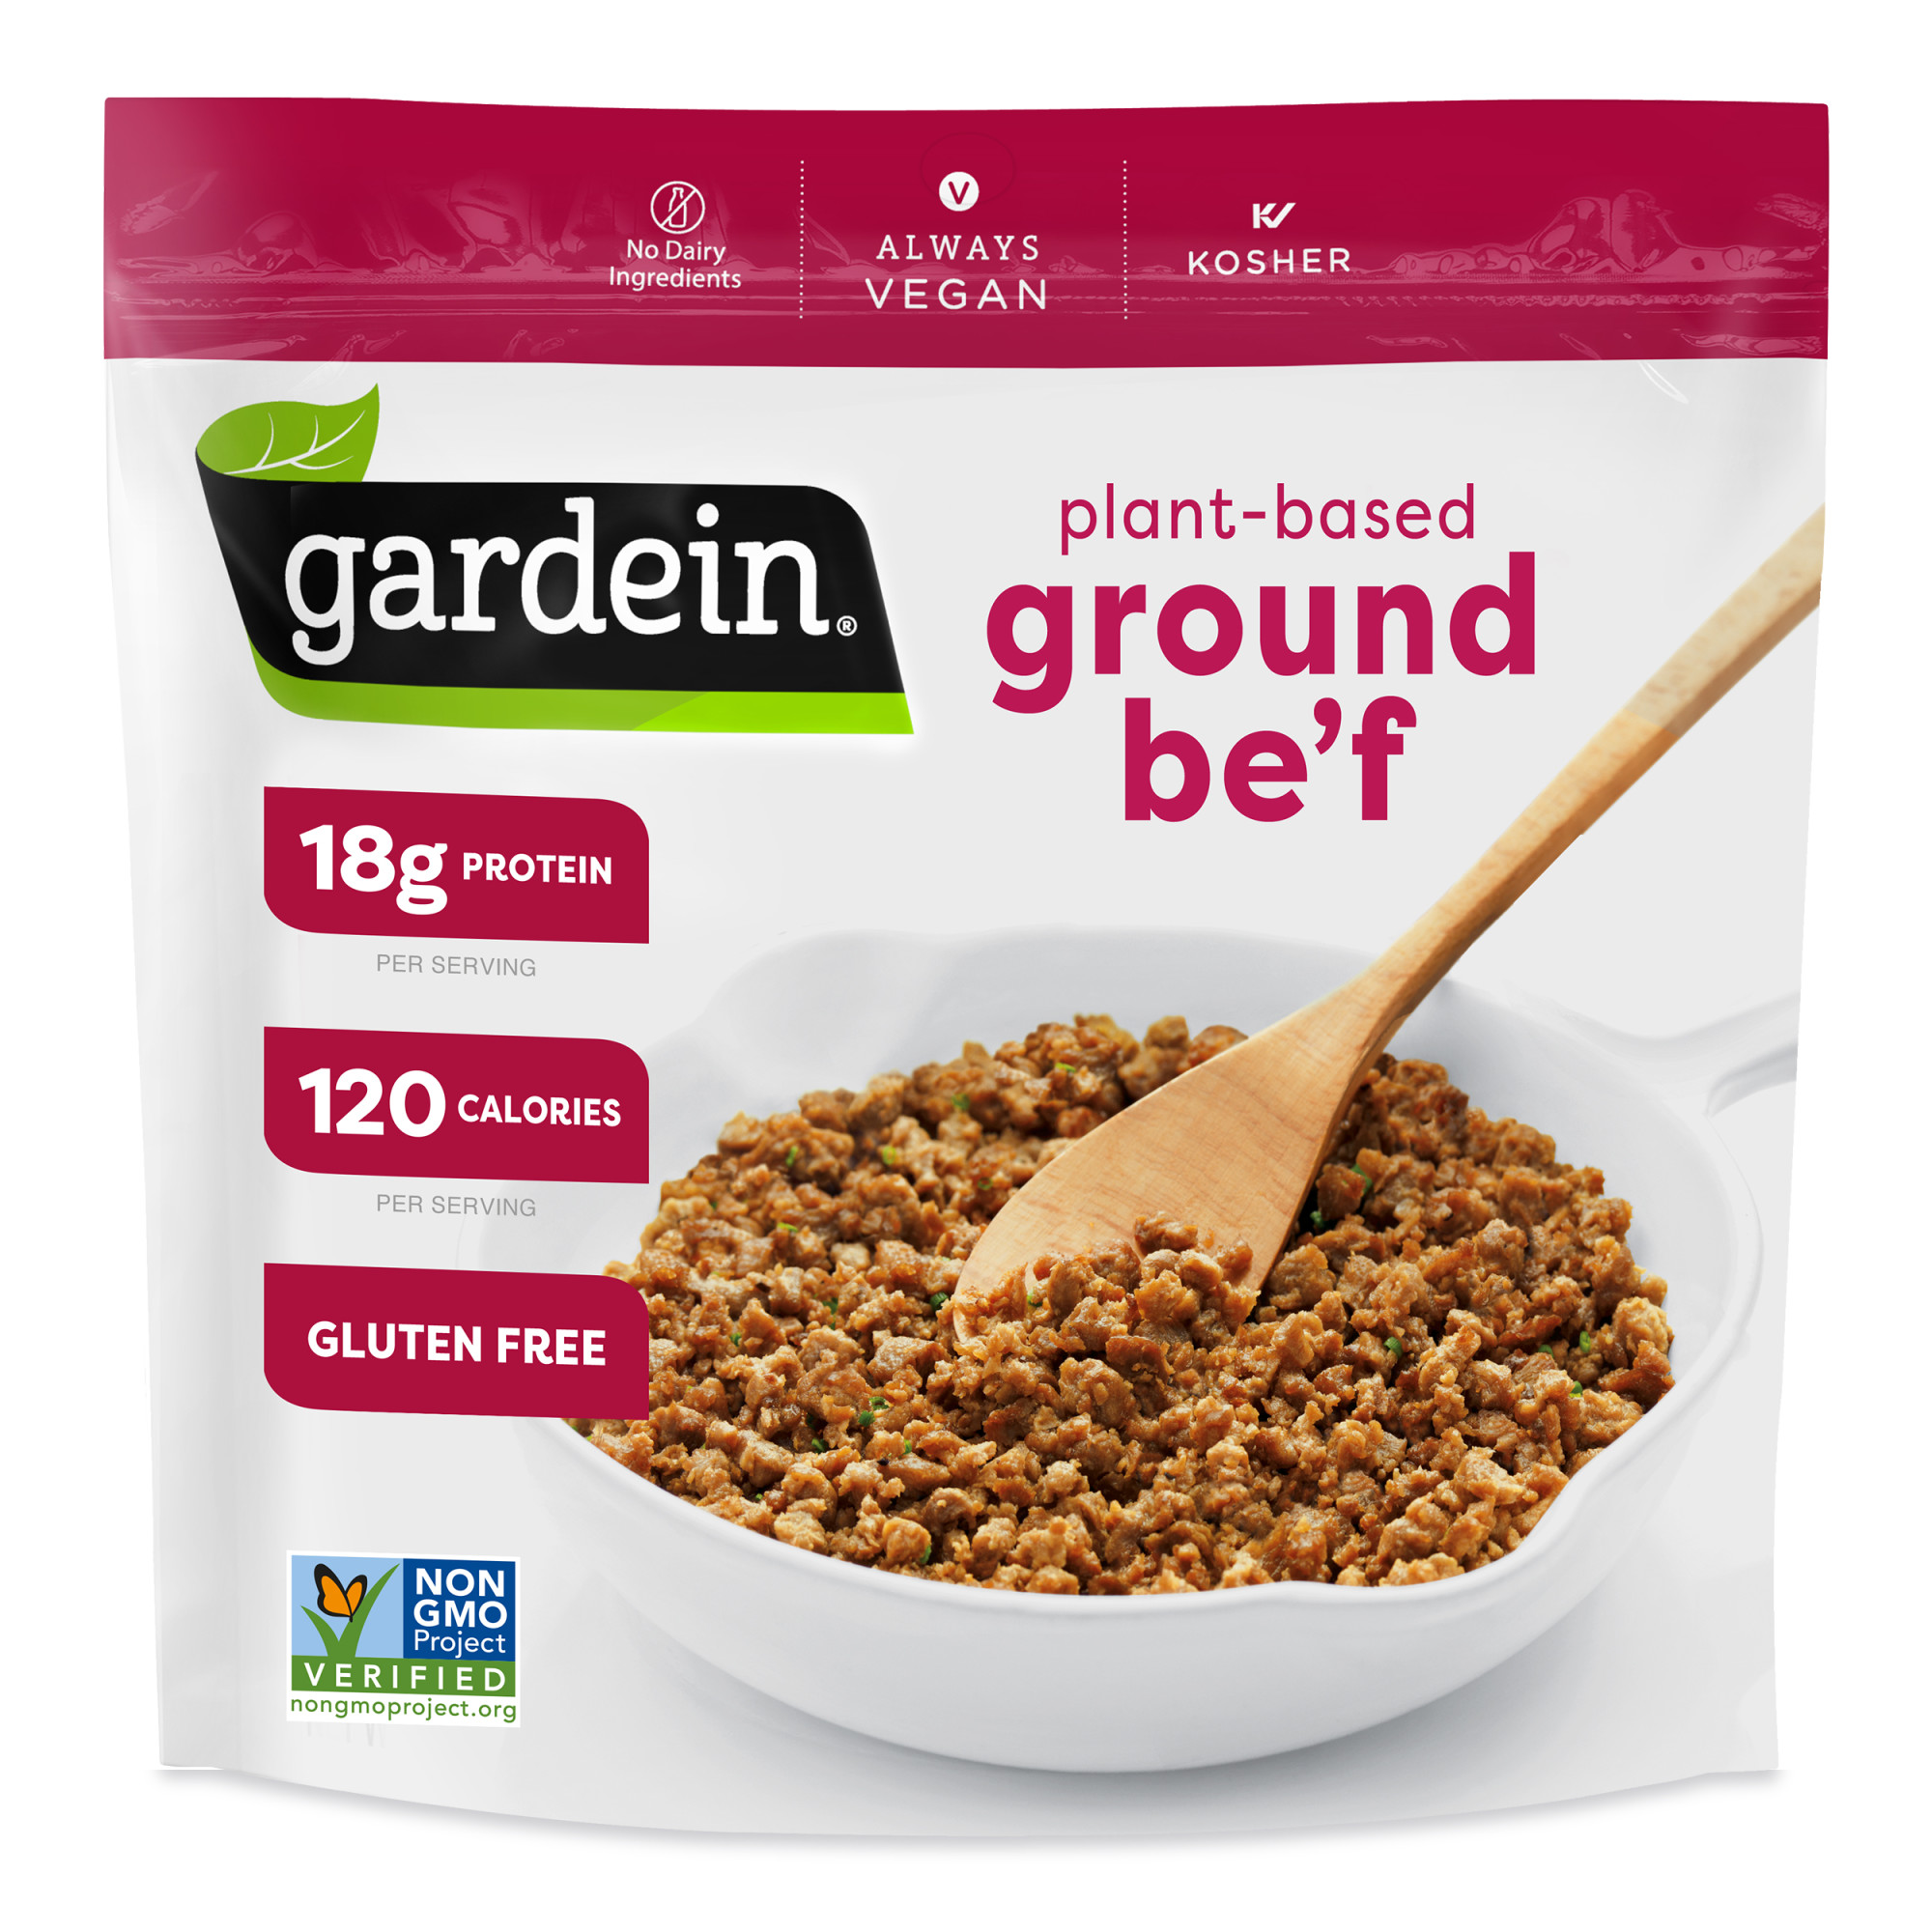 Gardein Plant-Based Vegan Ground Be'f Crumbles, 13.7 oz (Frozen) - image 1 of 8